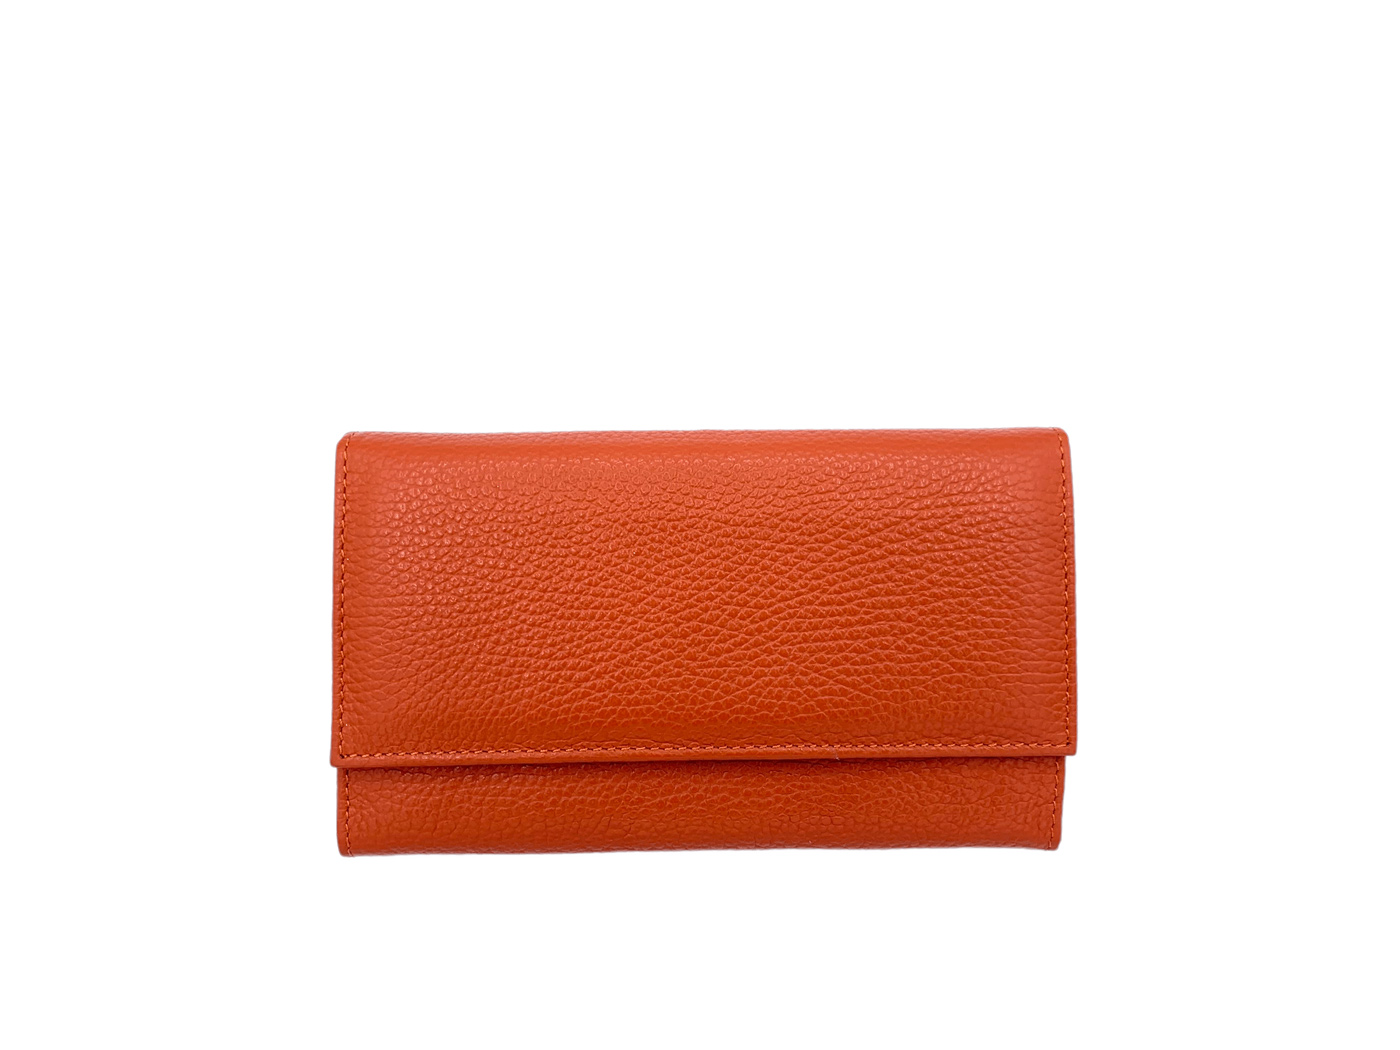 Medium leather wallet - Adele • Bolsieri Milano